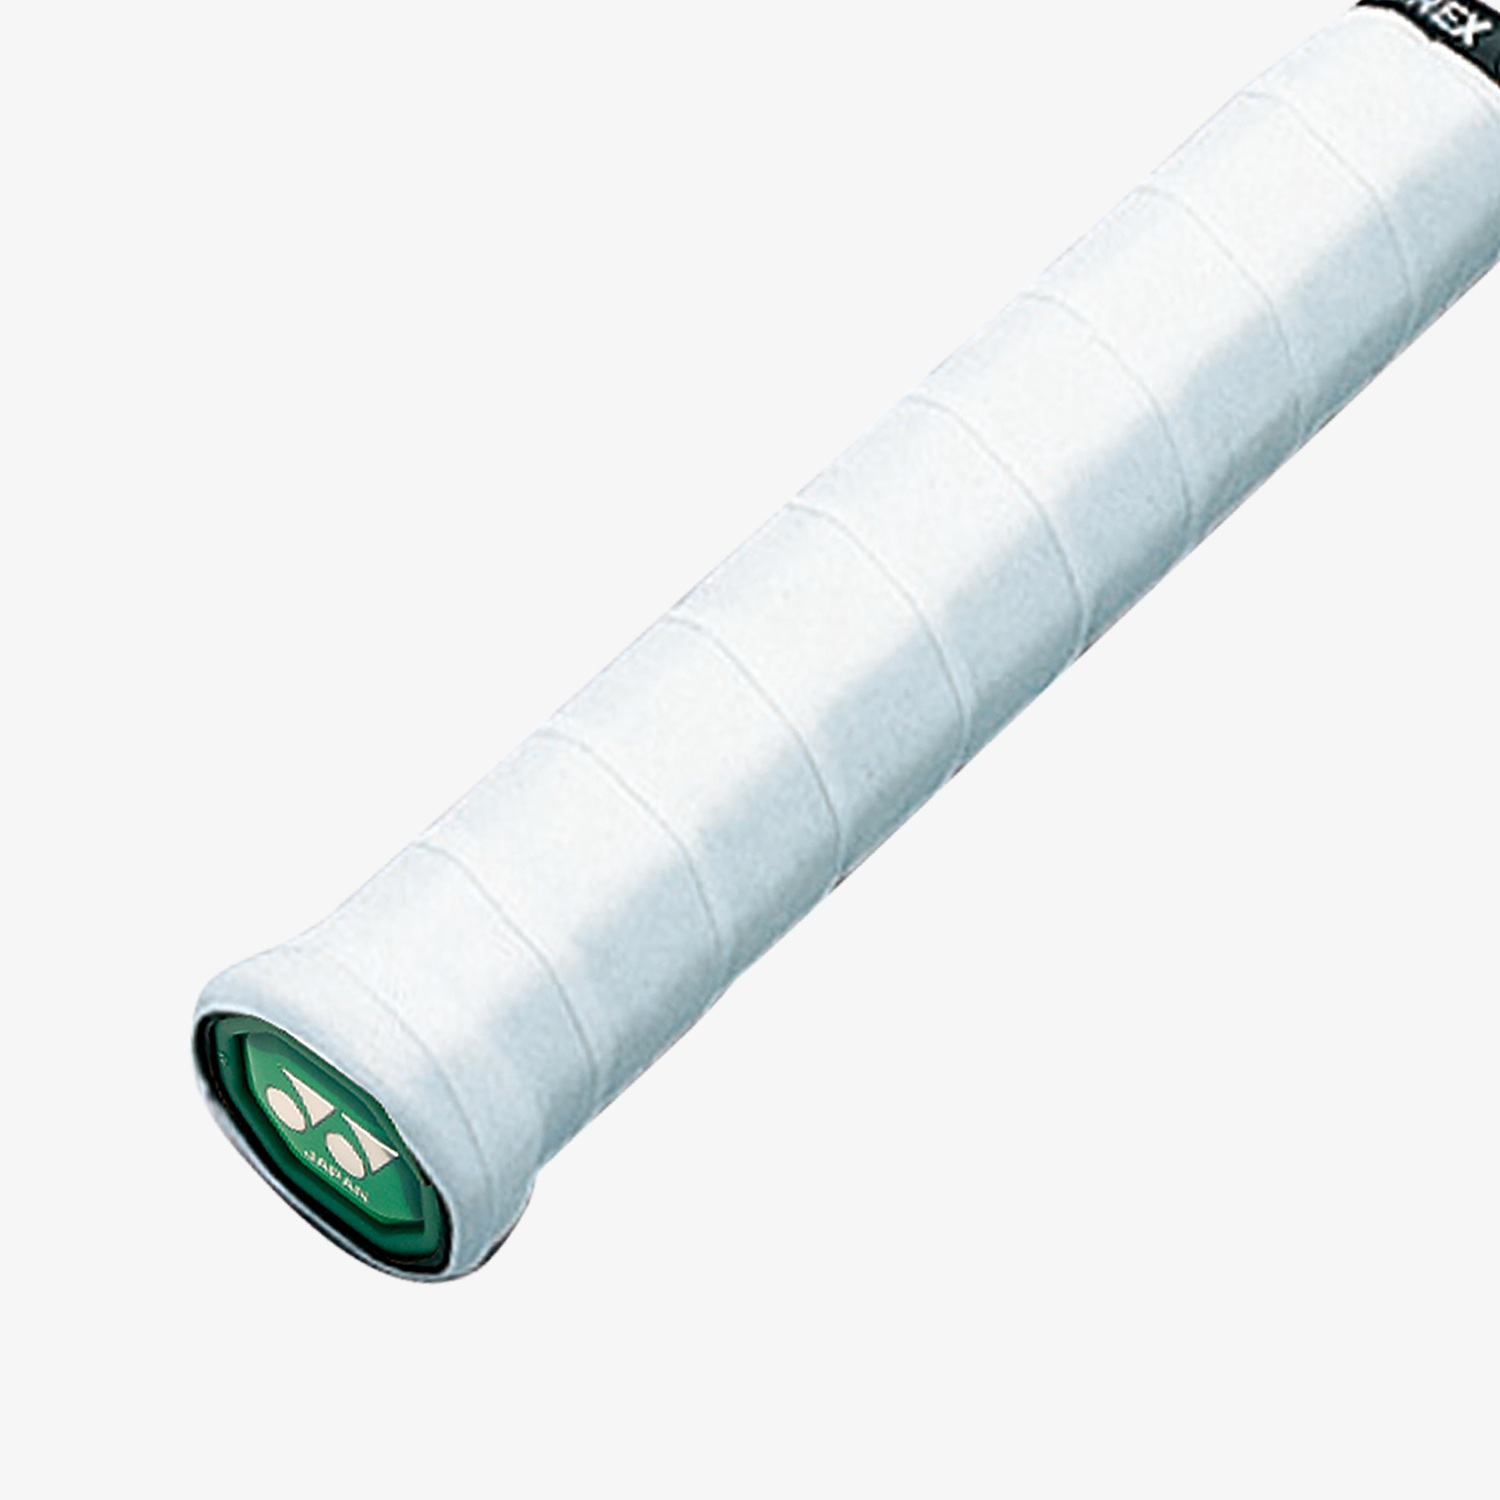 Yonex AC102EX-3 Super Grap Roll Racket Overgrip (3 Wraps)